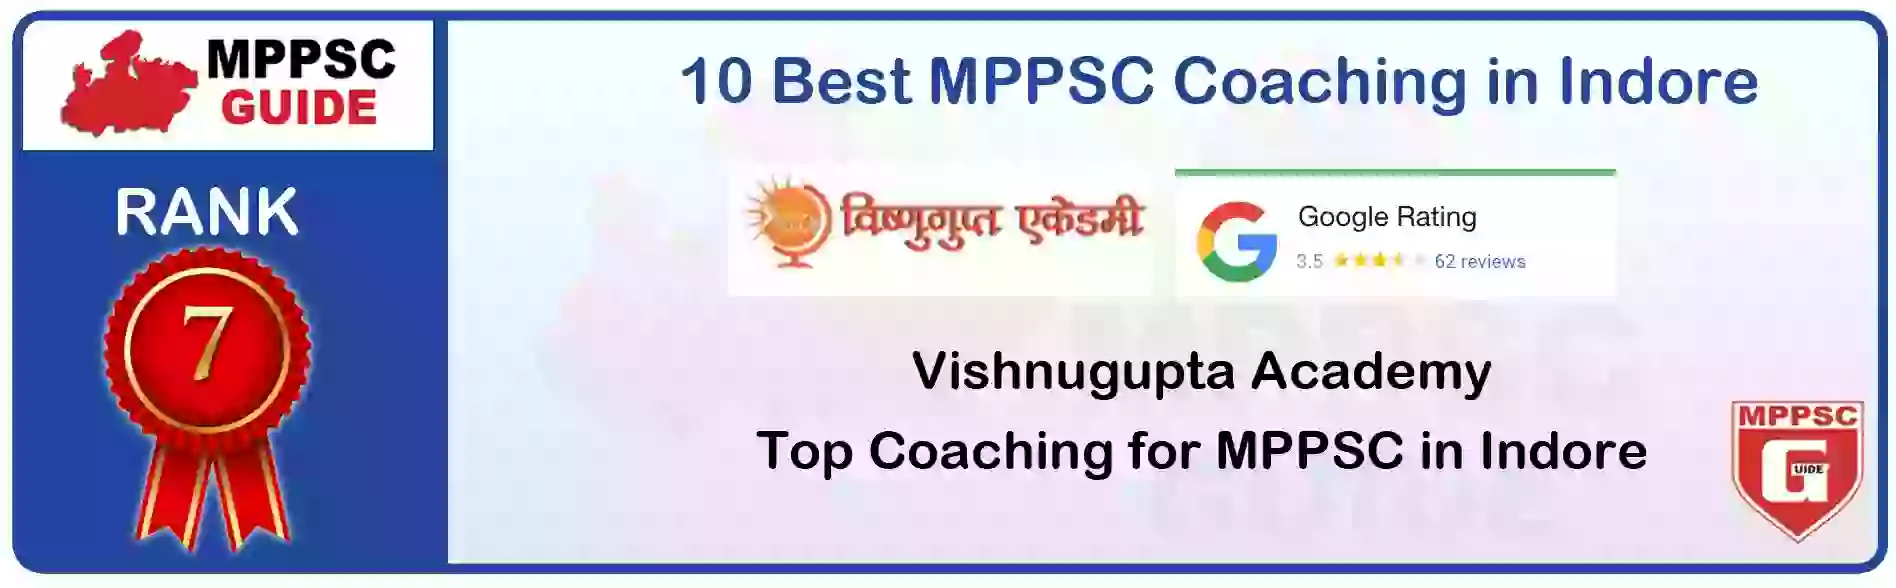 MPPSC Coaching in Anuppur, MPPSC Coaching Institute In Anuppur, Best MPPSC Coaching in Anuppur, Top 10 MPPSC Coaching In Anuppur, best mppsc coaching institute in anuppur, MPPSC Coaching Classes In Anuppur, MPPSC Online Coaching In Anuppur, mppsc coaching in Anuppur bhanwarkua